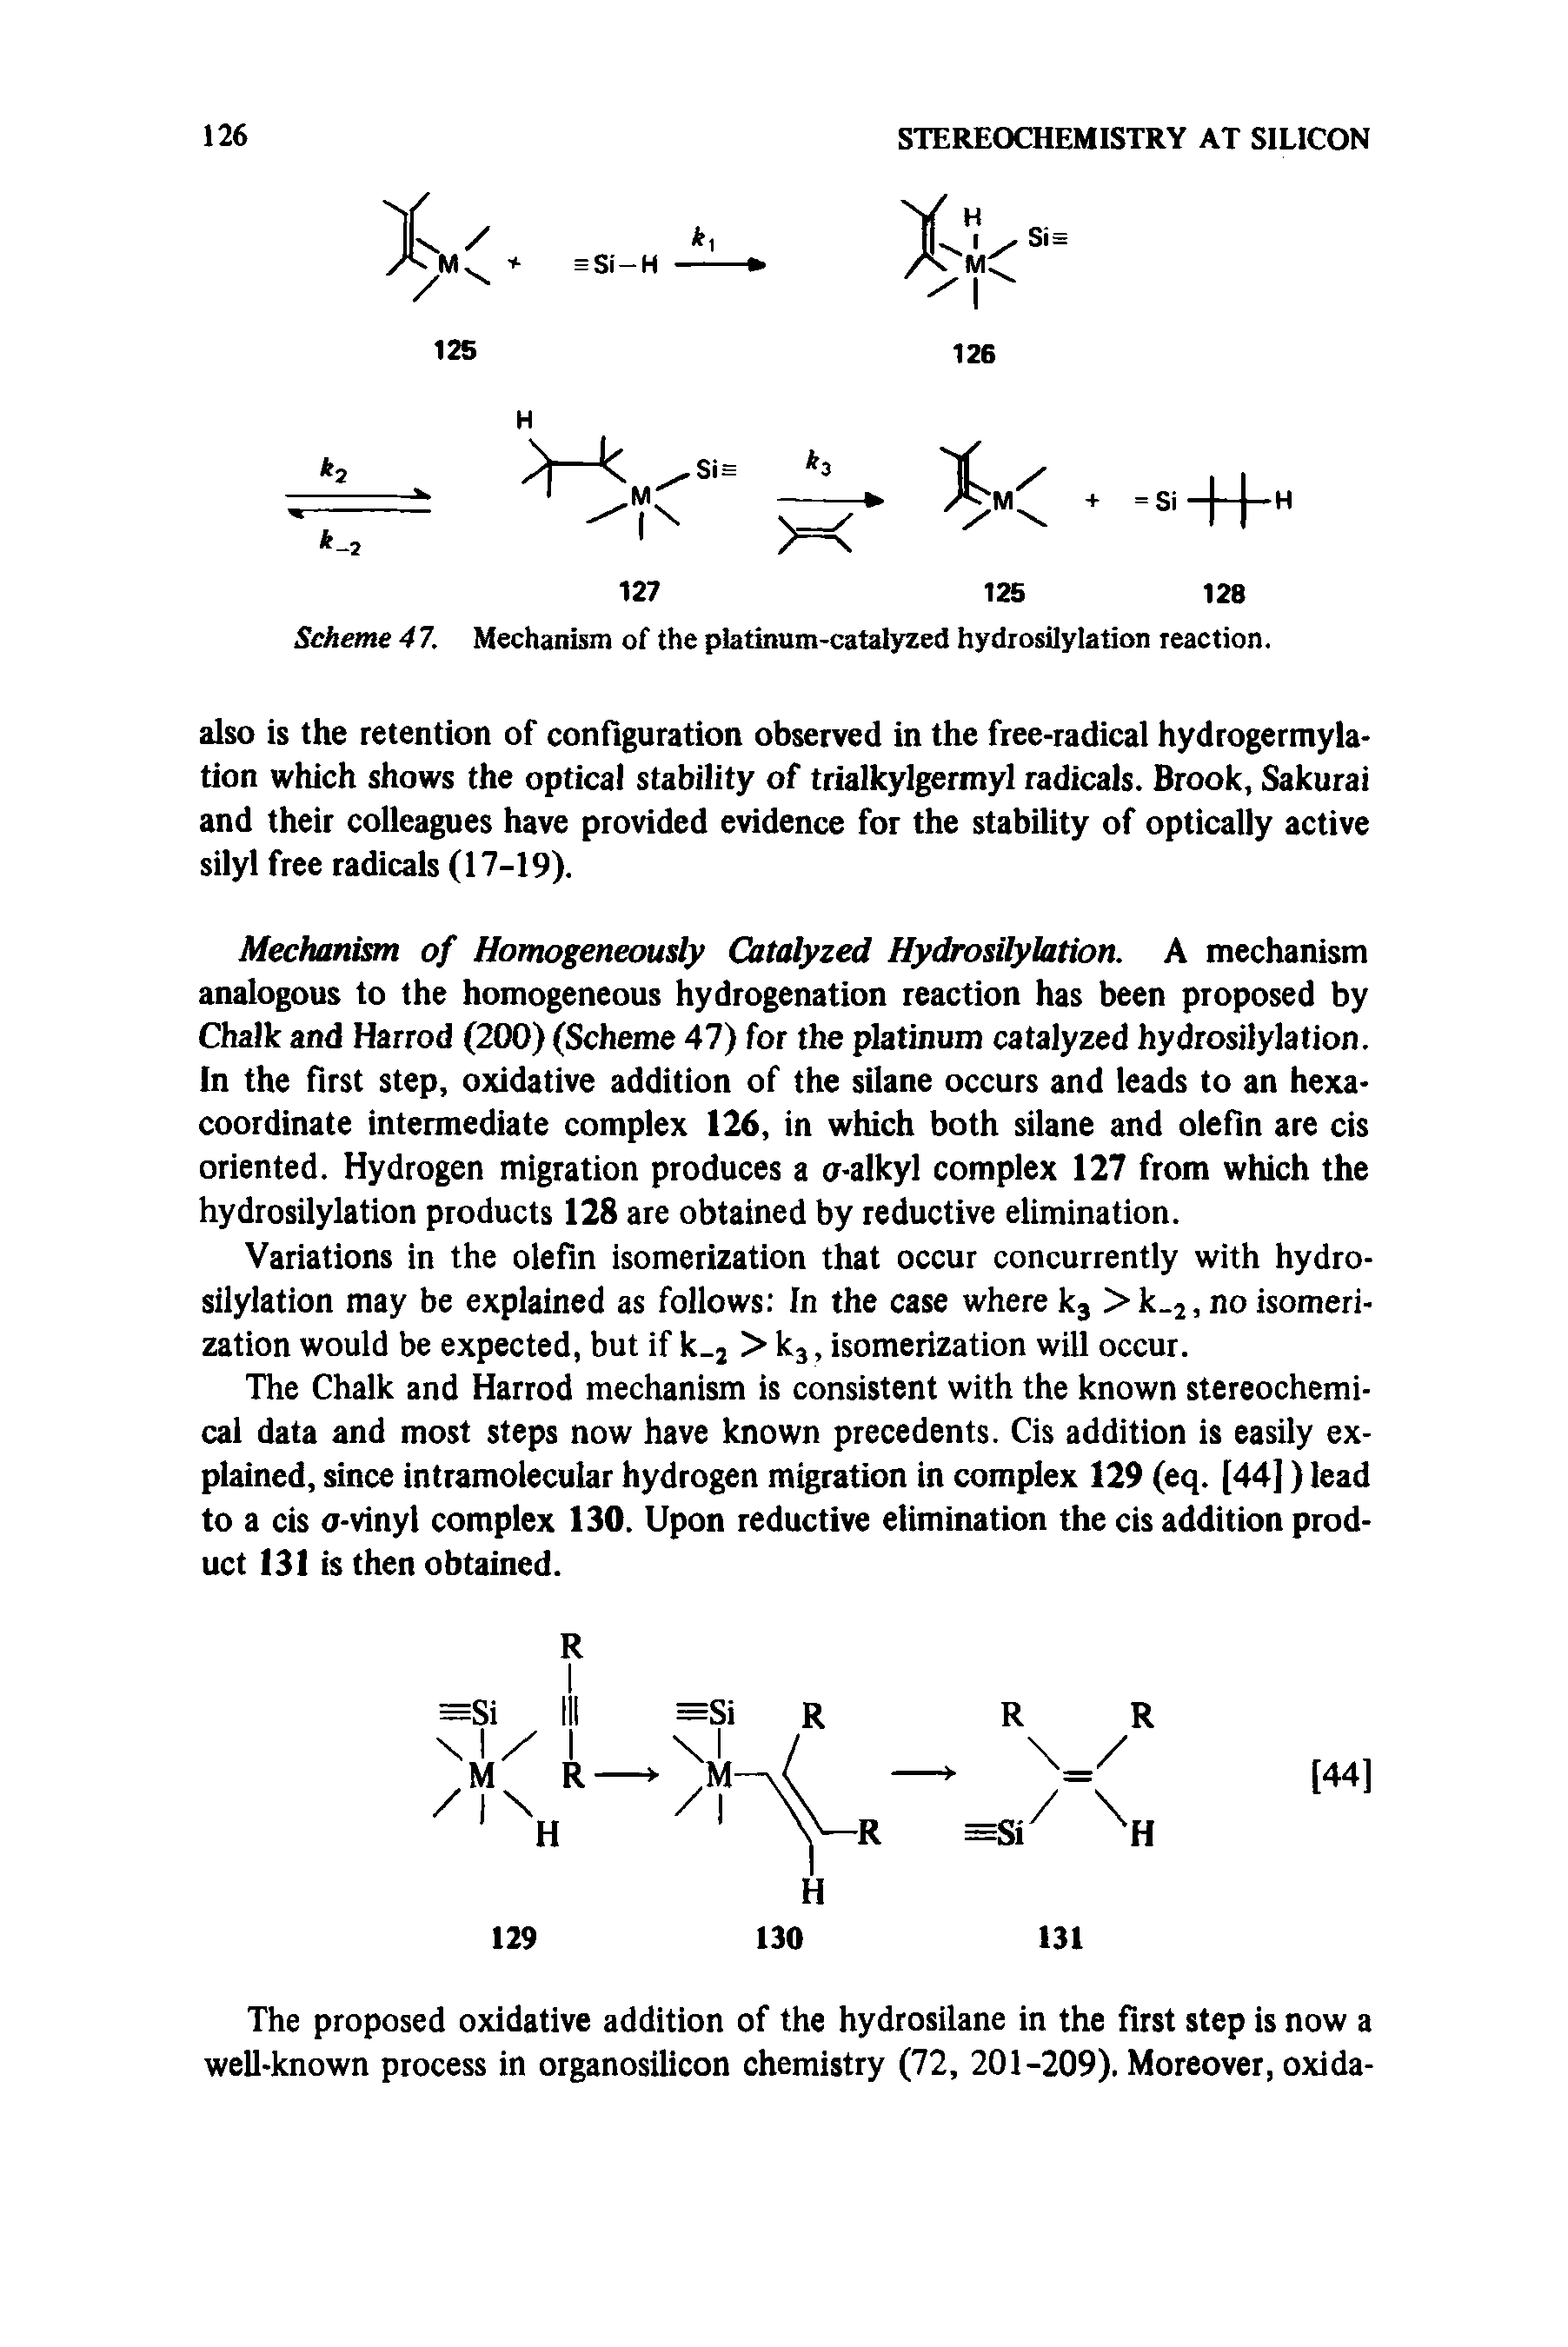 Scheme 47. Mechanism of the platinum-catalyzed hydrosilylation reaction.